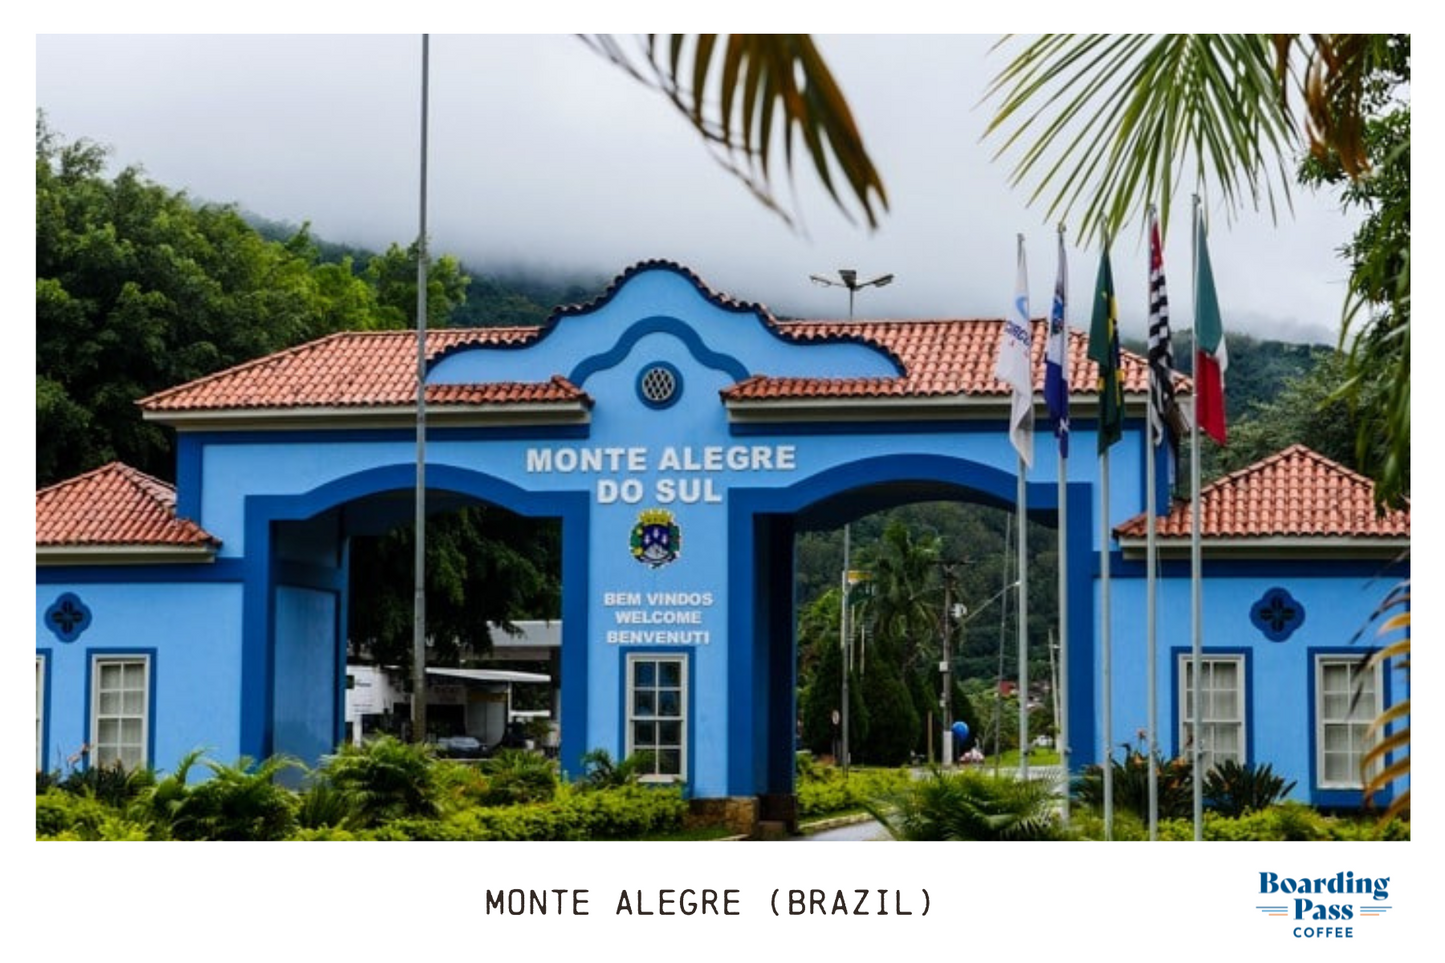 Monte Alegre (Brazil) - Light Roast